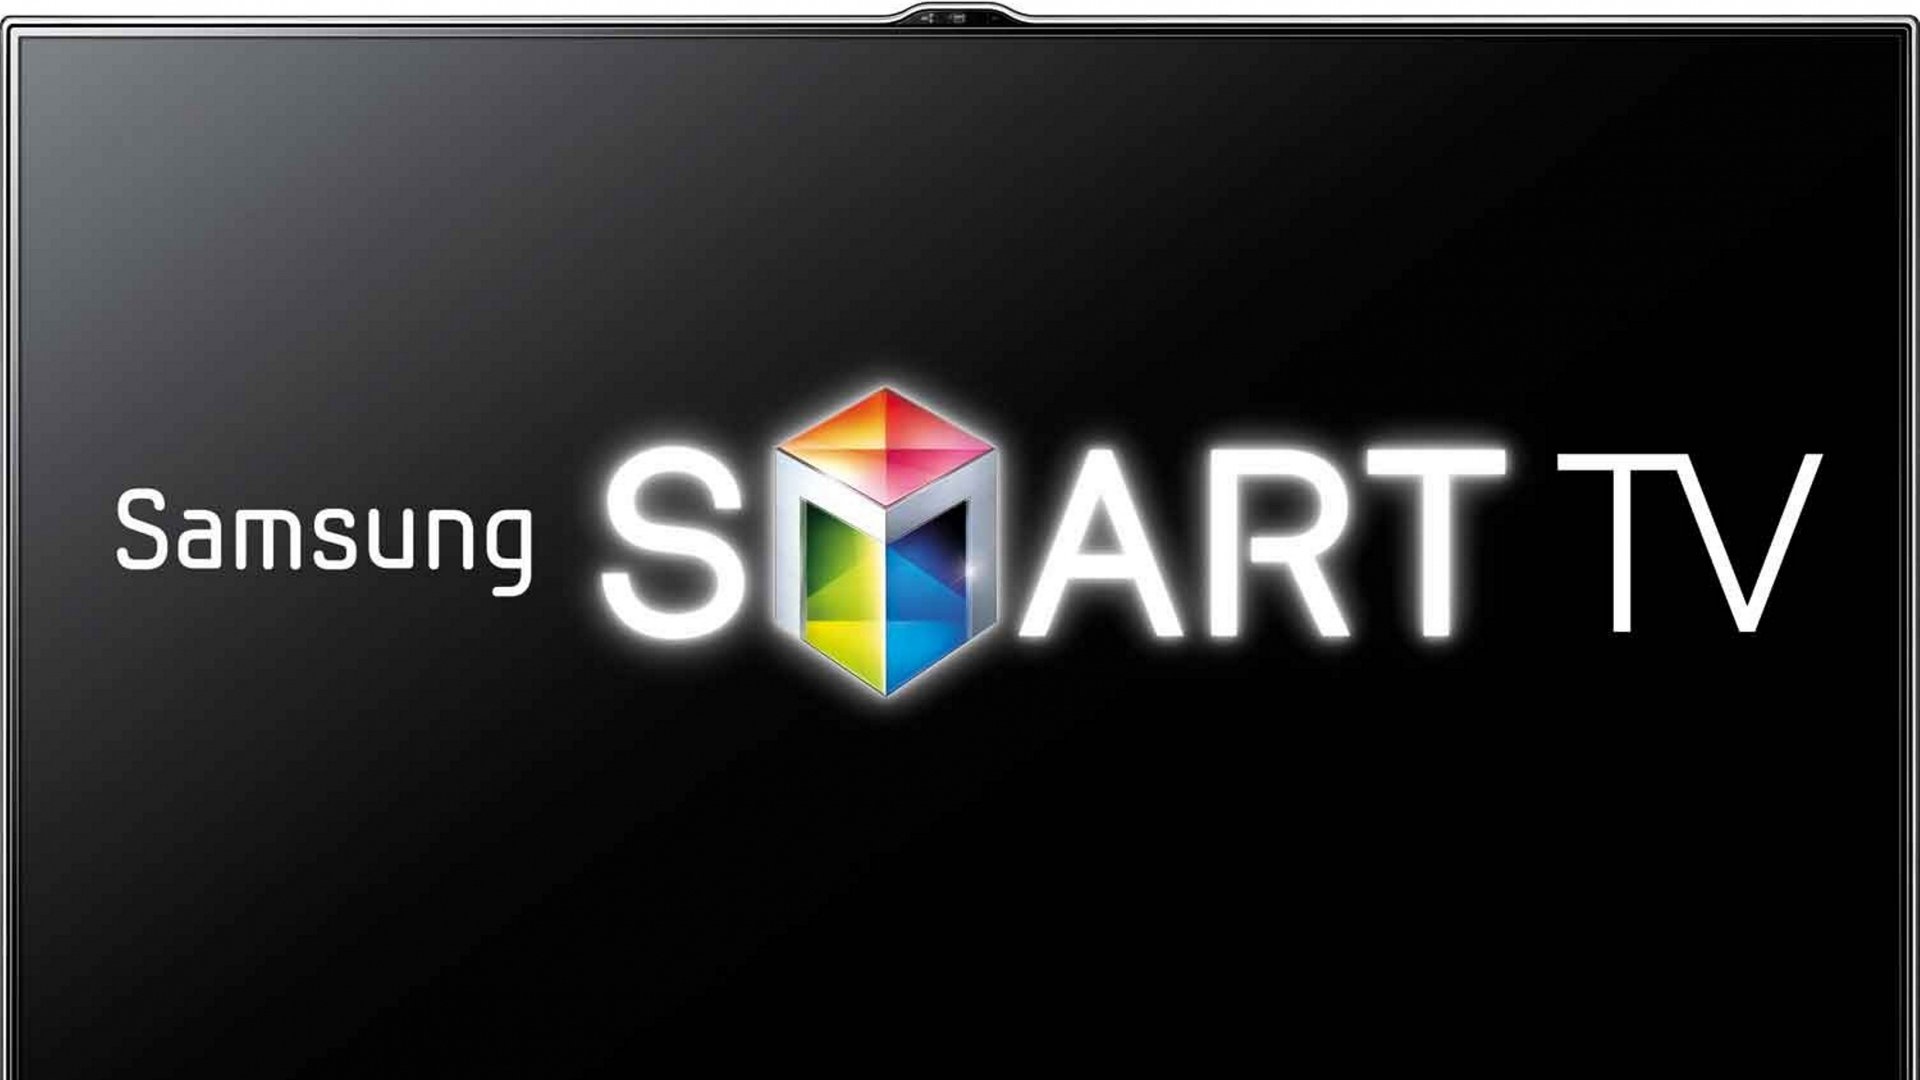  1920x1080 Samsung Smart Tv Wallpaper Background Full HD 1080p